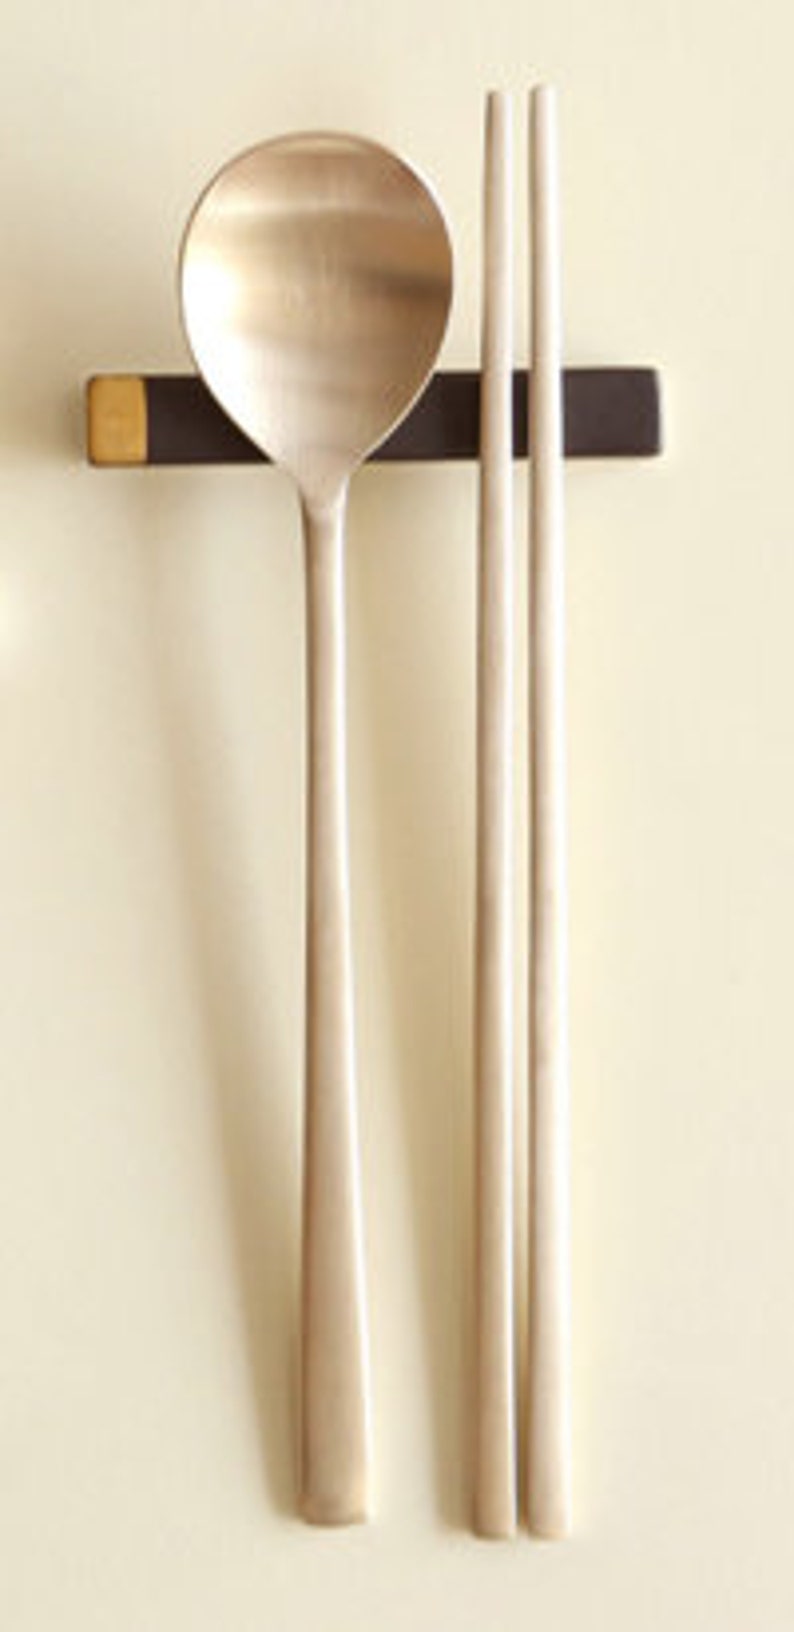 Notdam: Male Spoon Set image 4